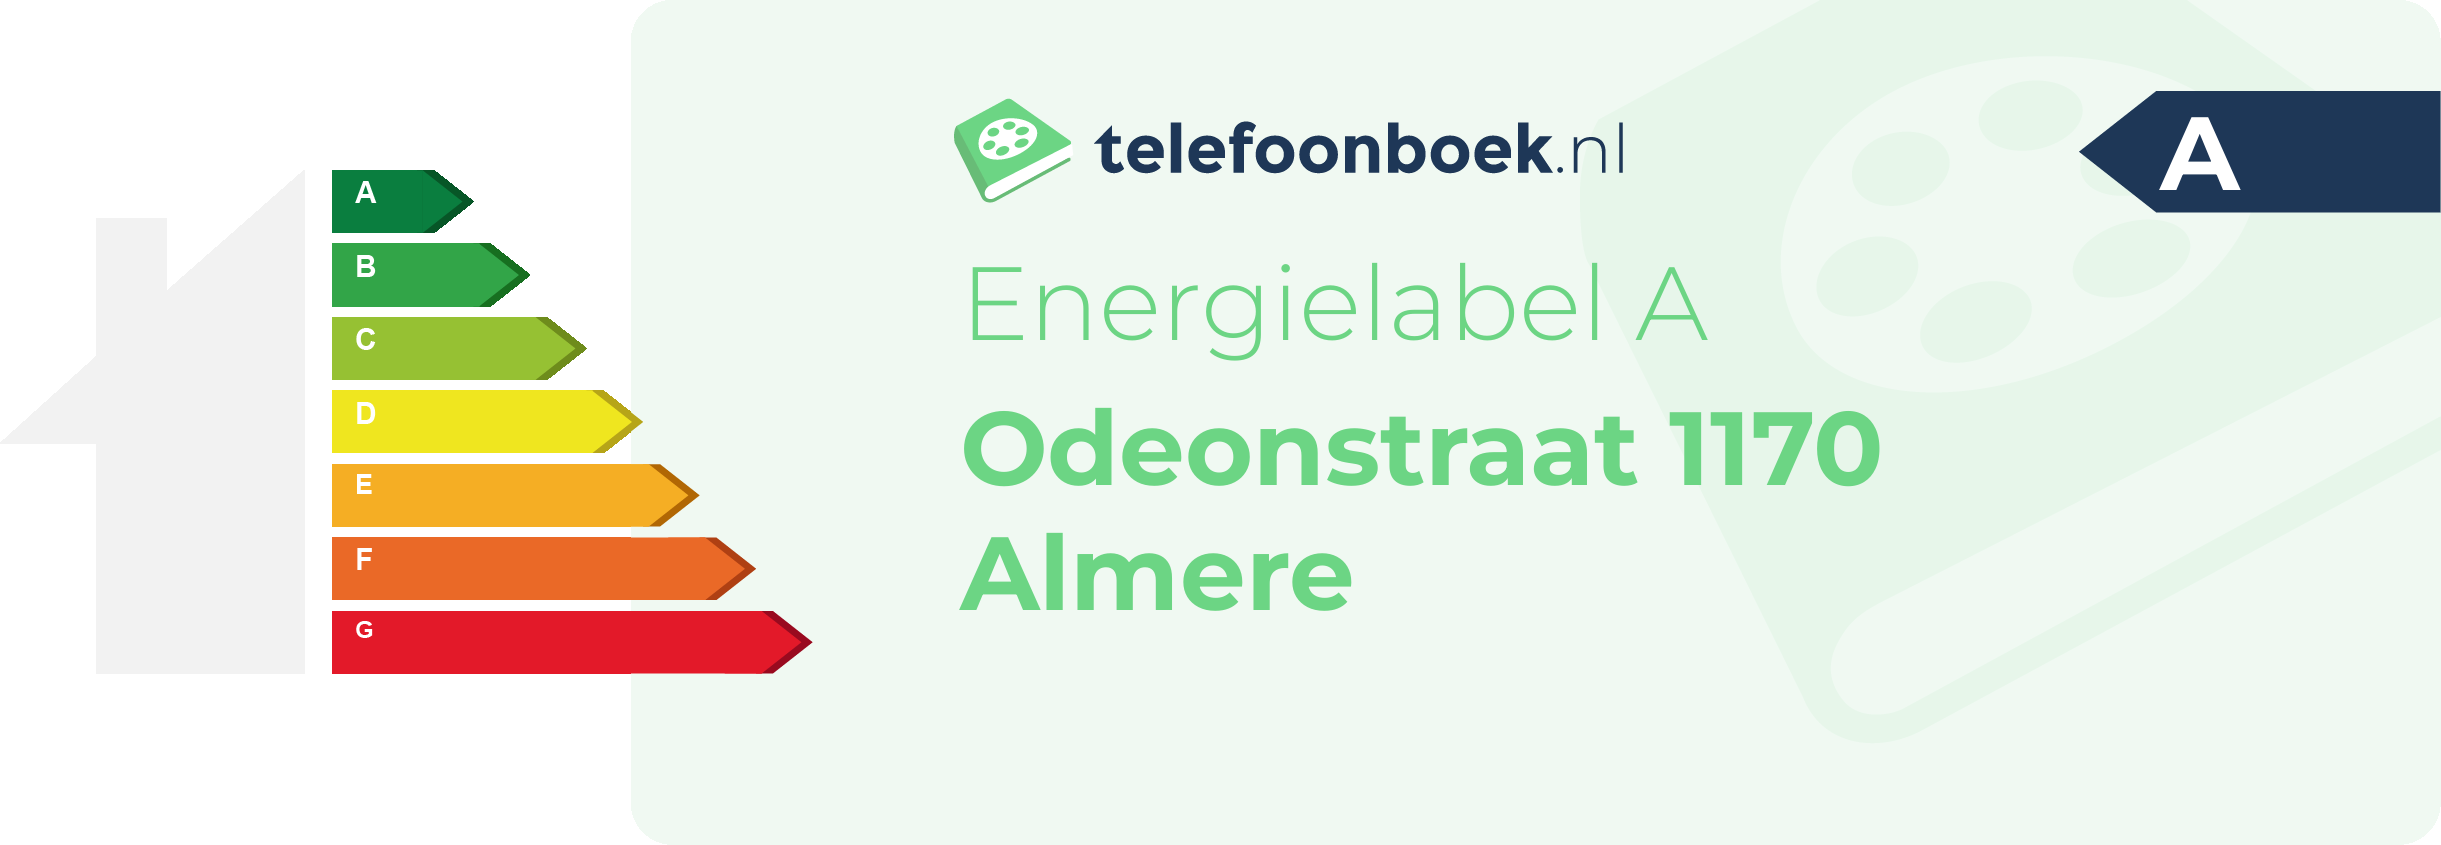 Energielabel Odeonstraat 1170 Almere